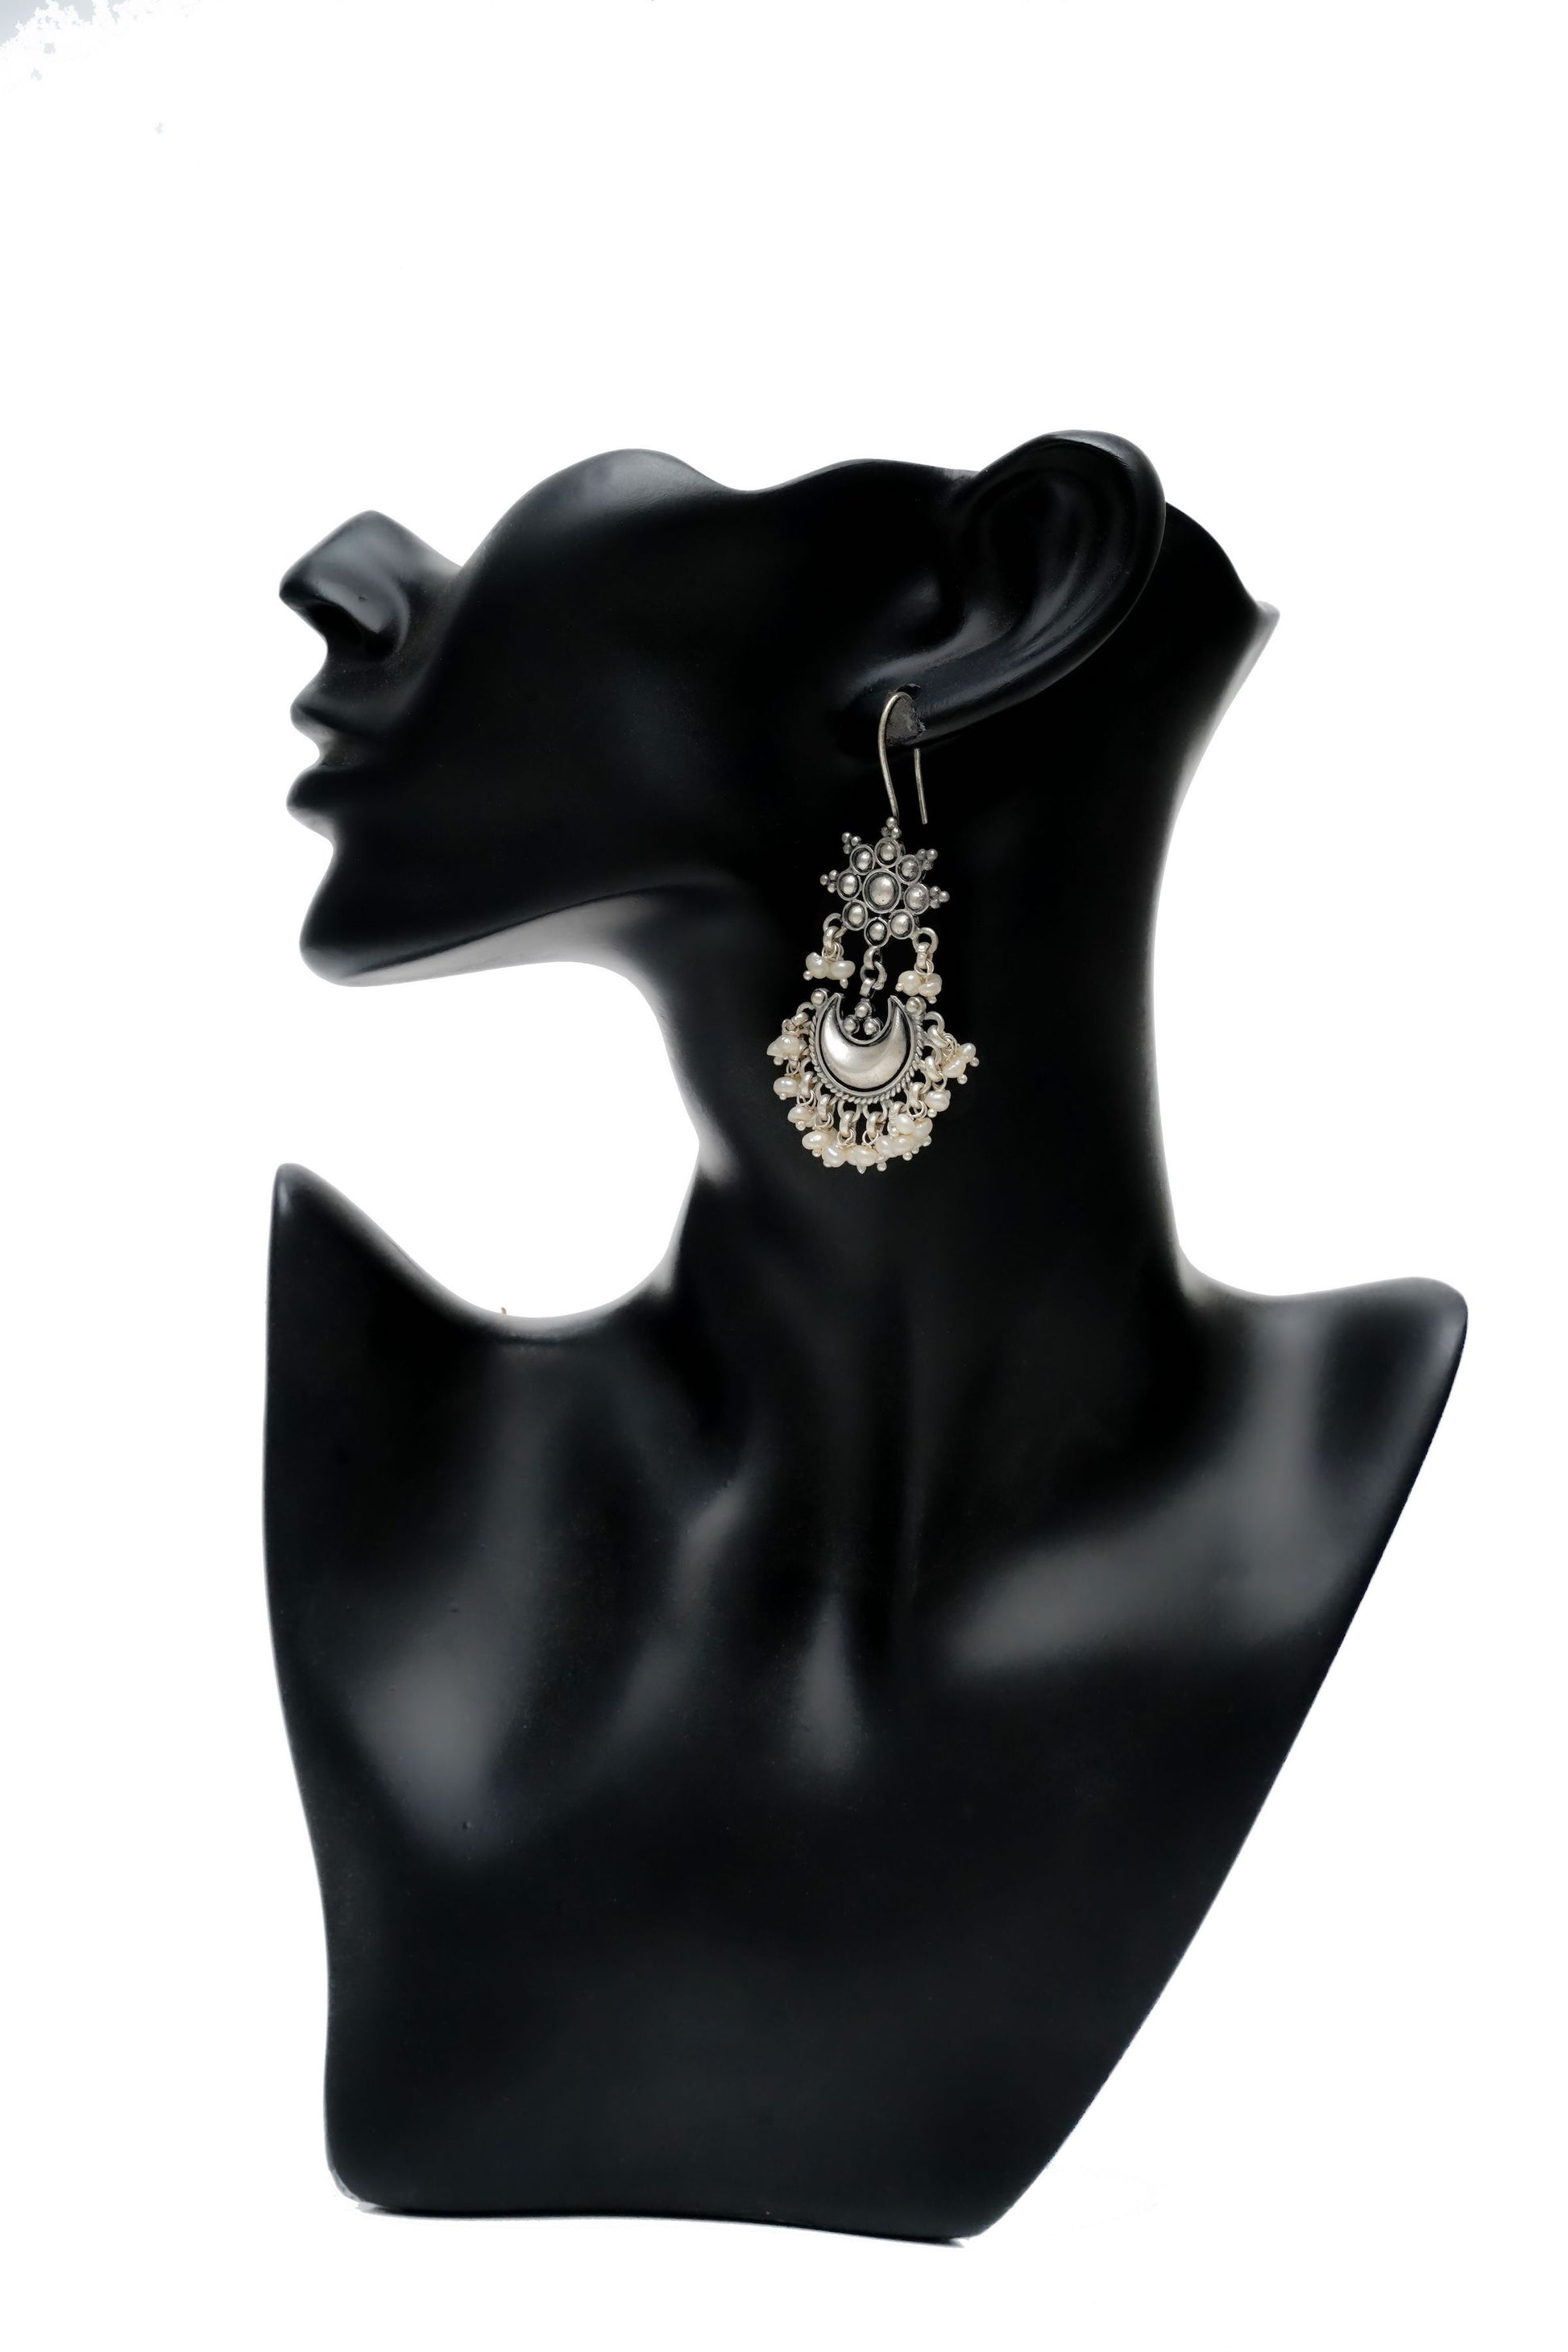 925 Silver Chaand Earrings with Pearls - Neeta Boochra Jewellery